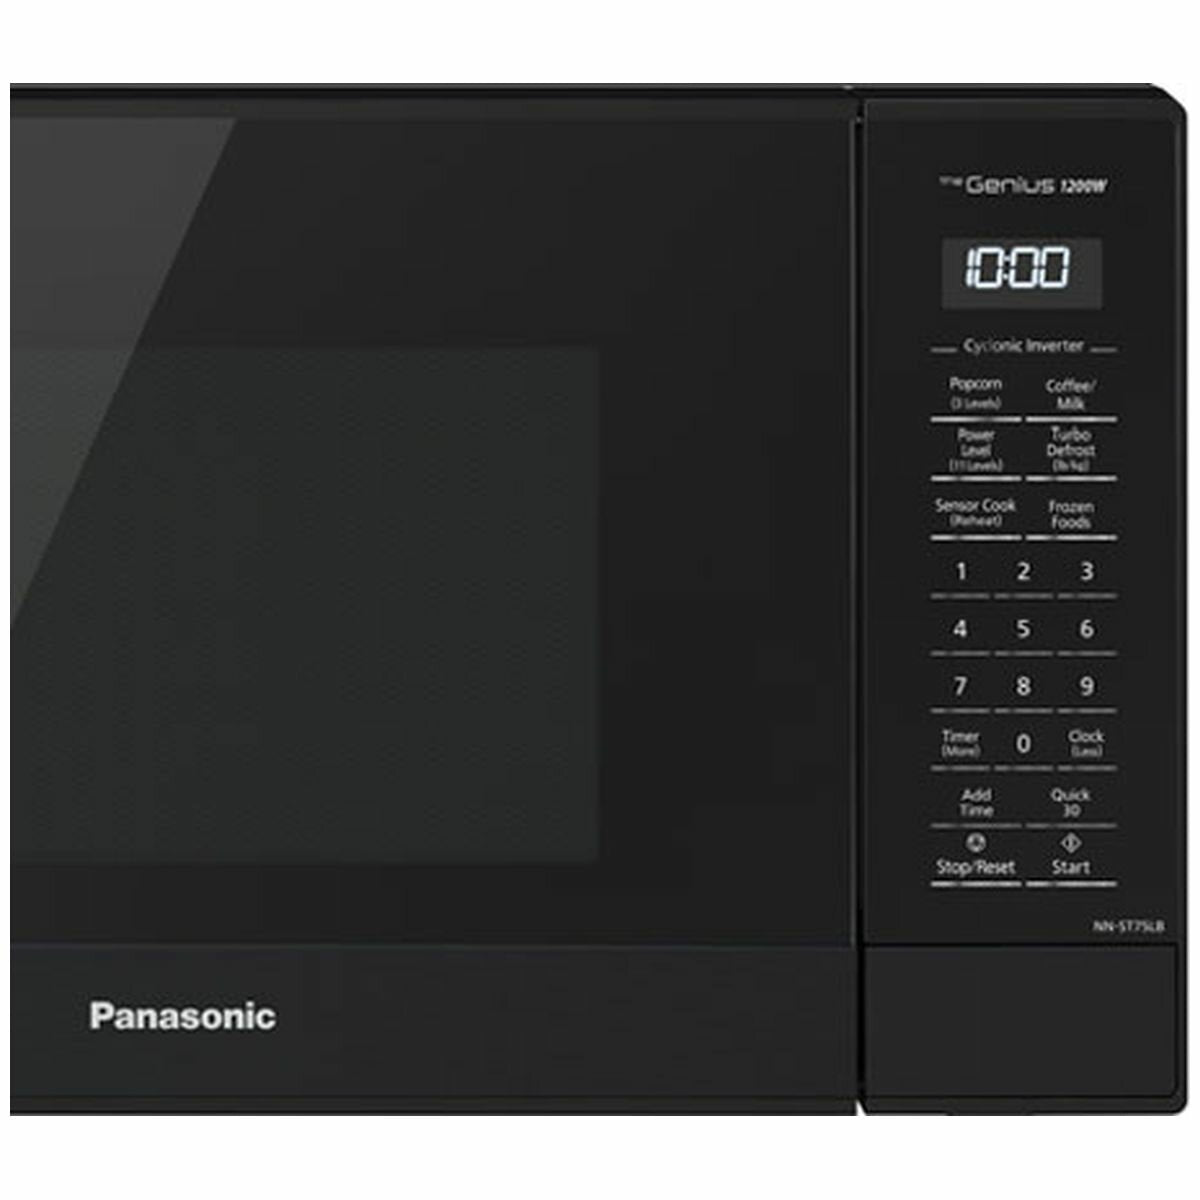 Panasonic 44L Cyclonic Inverter Microwave Oven Model NN-ST75LBQPQ